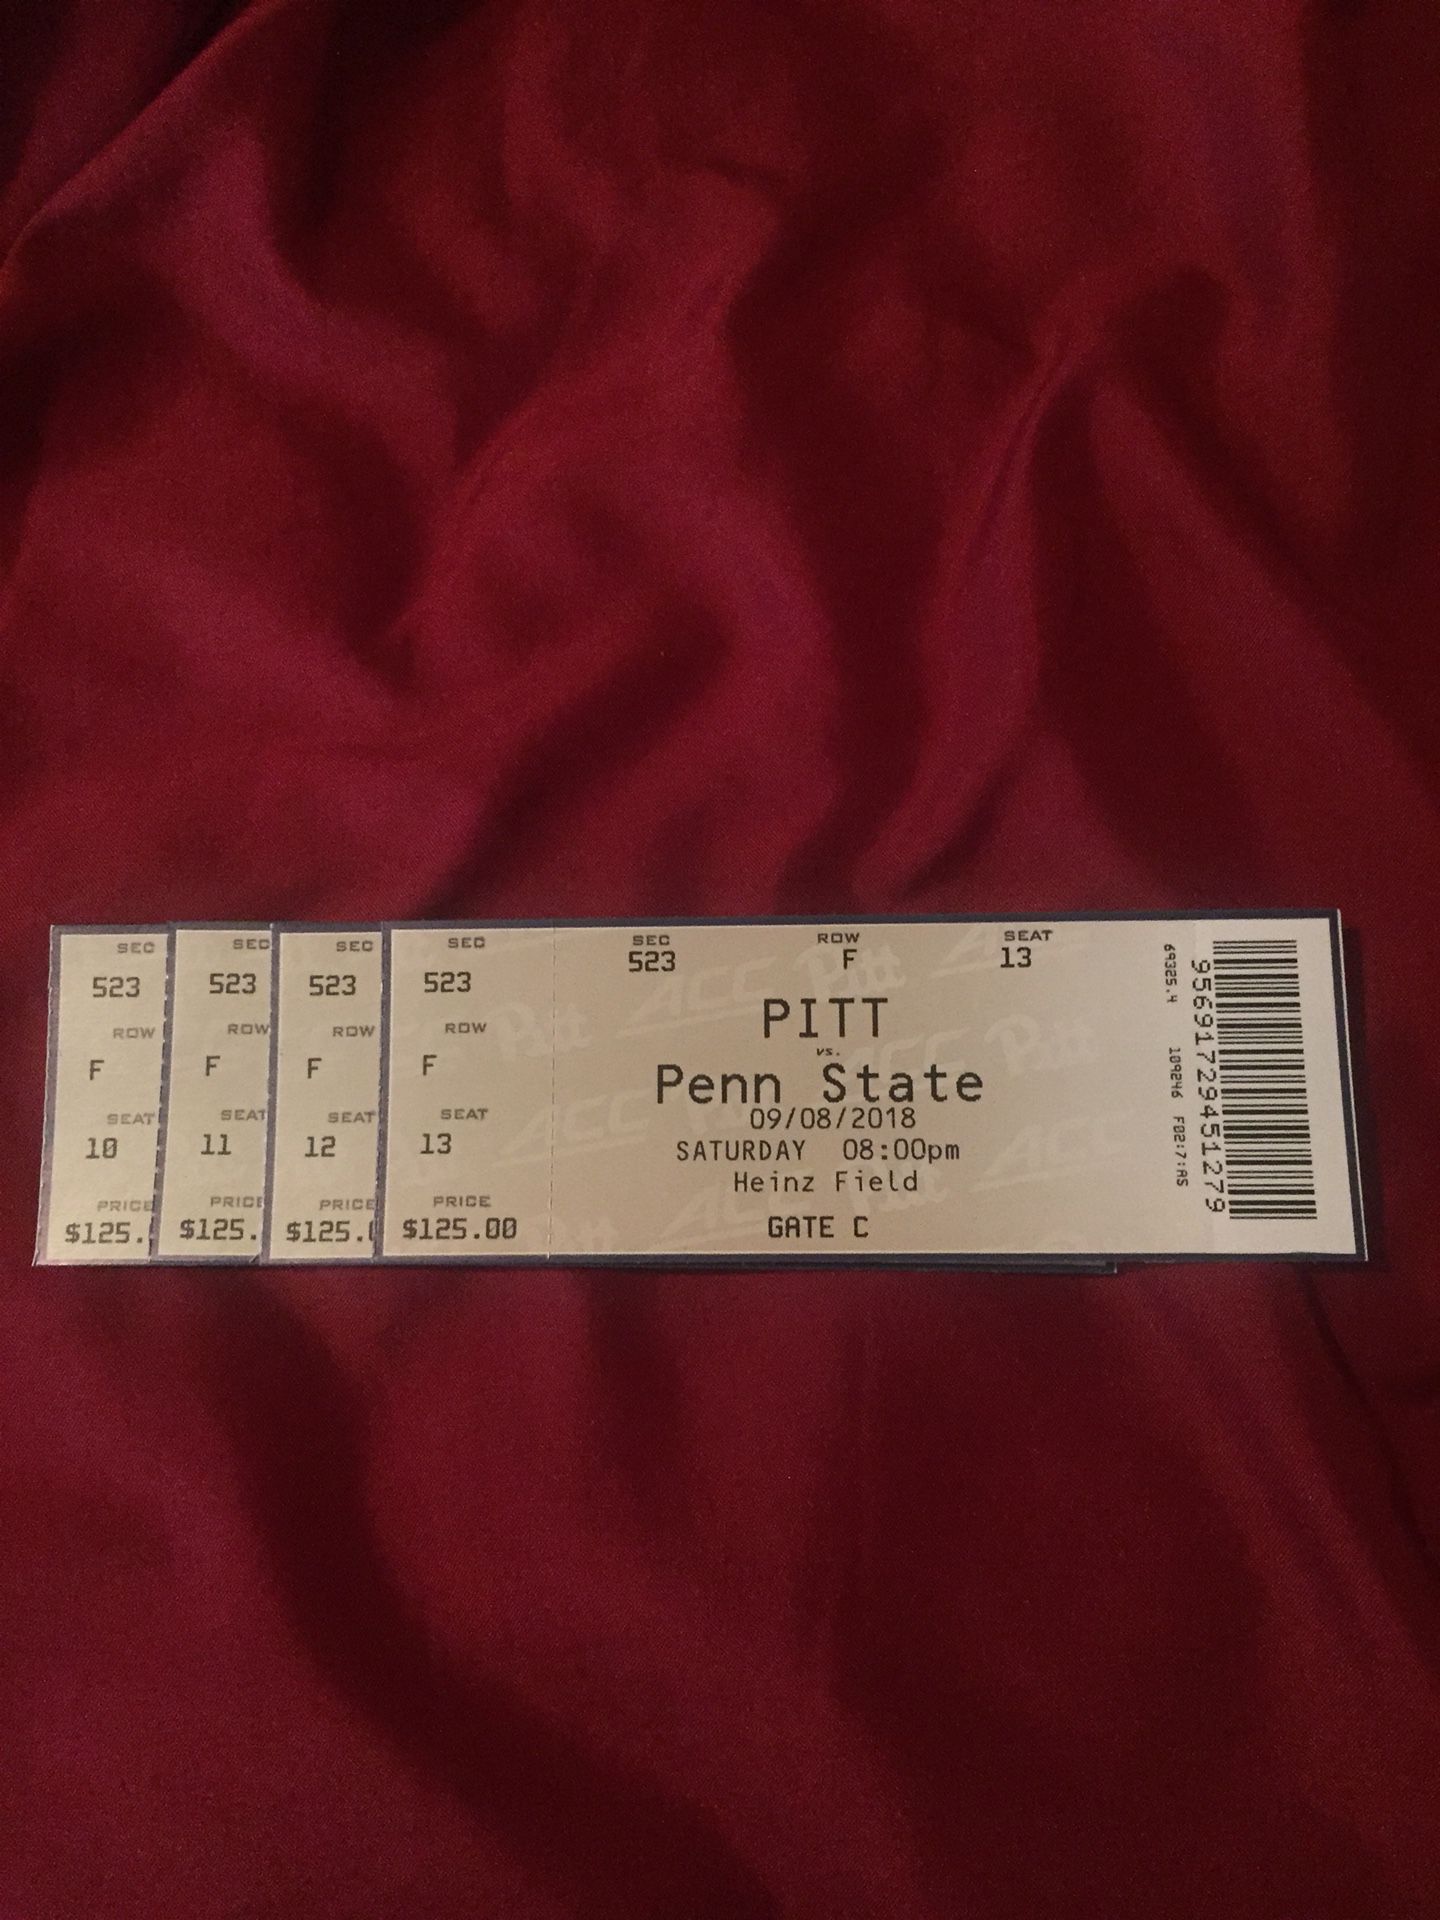 Penn state vs Pitt - 9/8/18 - section 523 row F seats 10-13